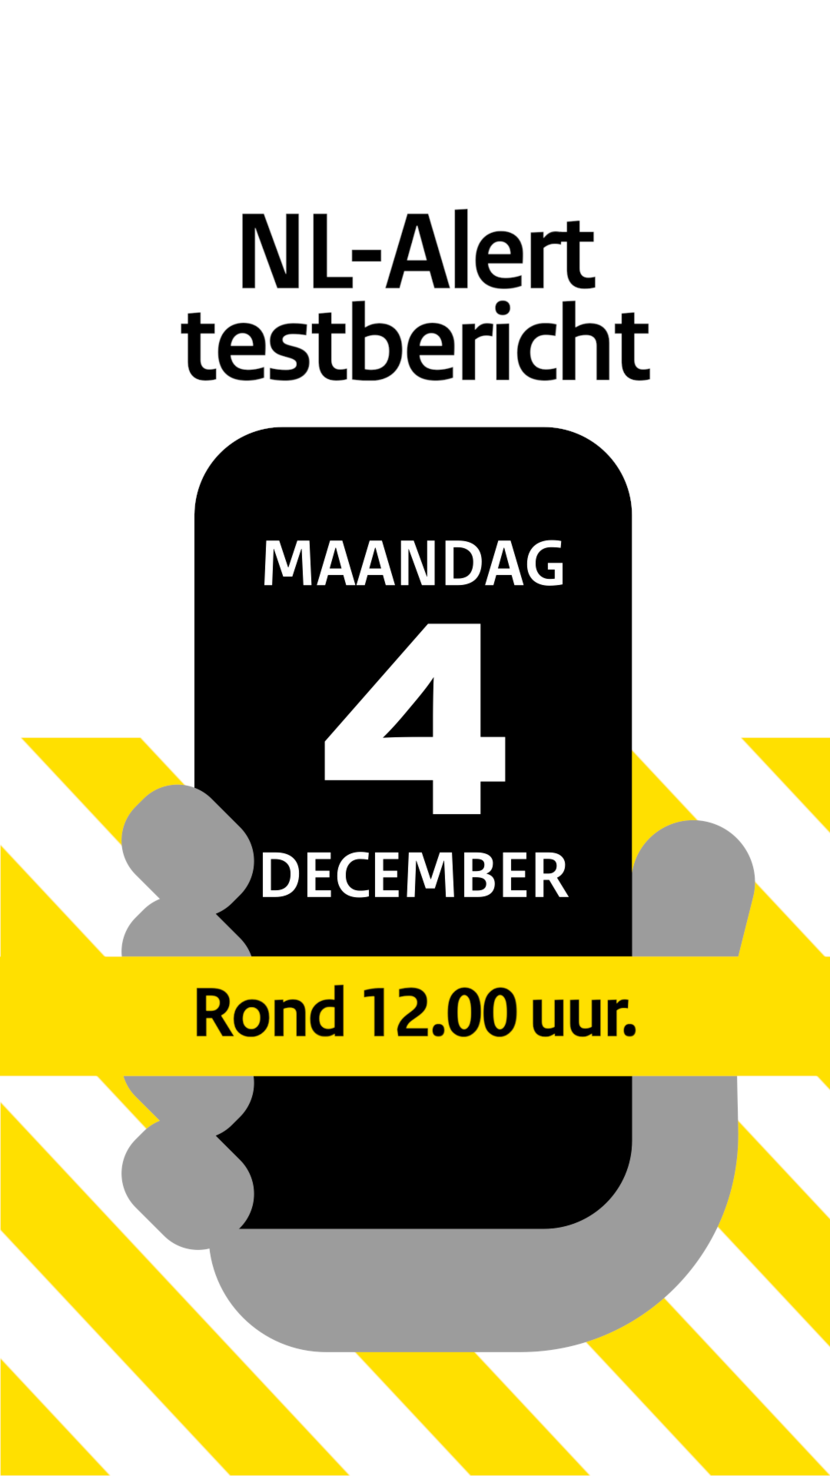 Aankondiging NL-Alert testbericht op 4 december rond 12:00